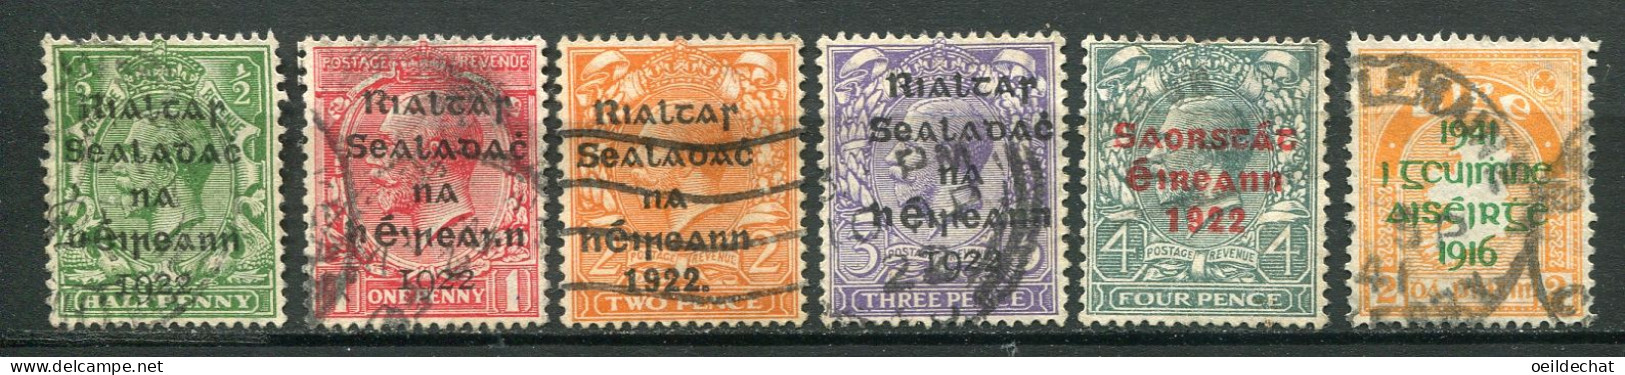 25676 Irlande N°1/2,4,6,31,93° Timbres De Grande-Bretagne De 1912-22 Surchargés 1922-41  B/TB - Used Stamps